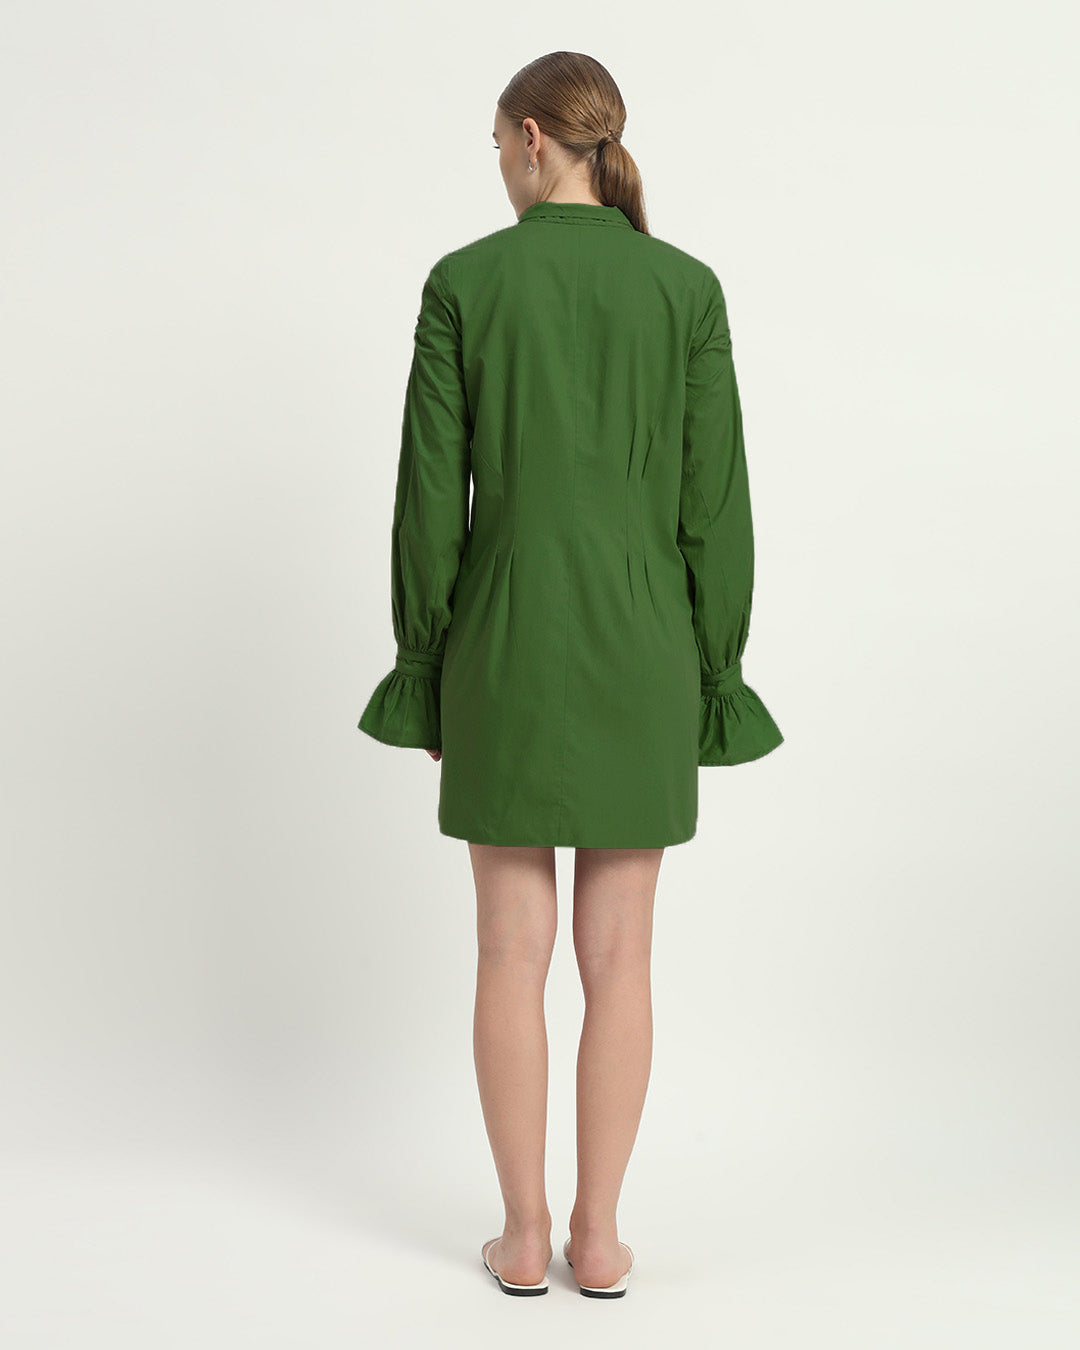 The Sedona Emerald Cotton Dress